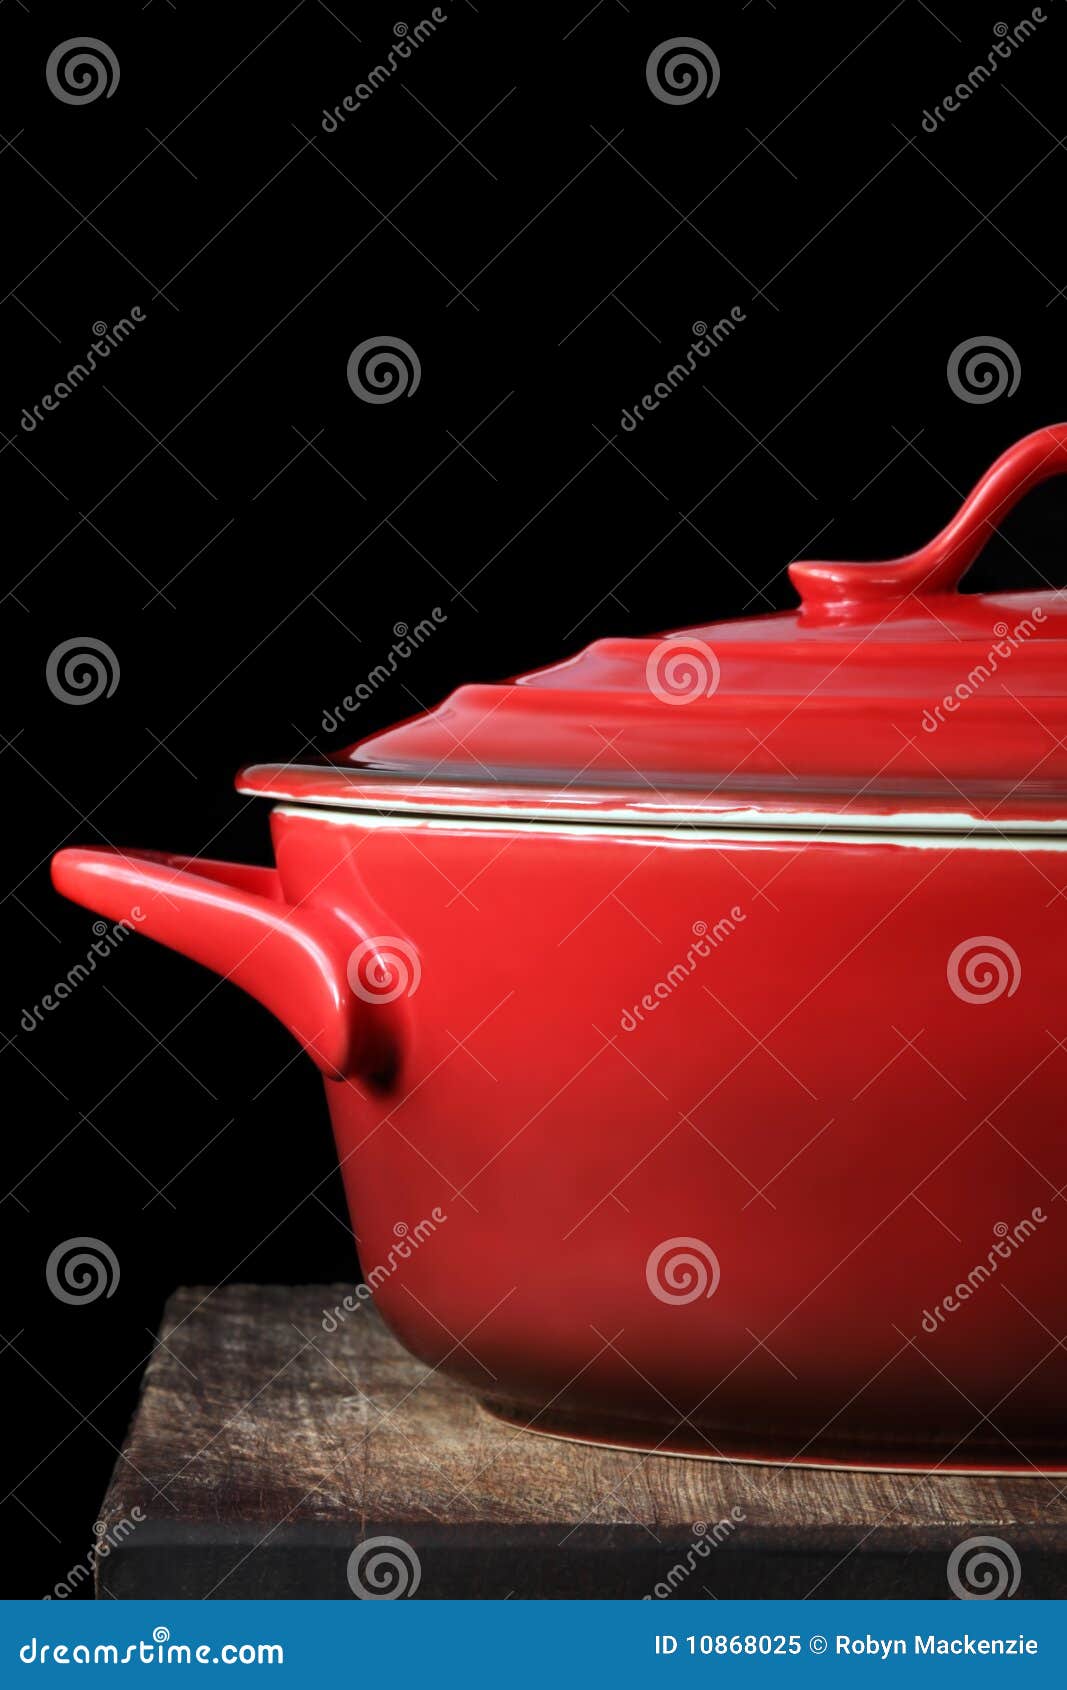 red crock pot